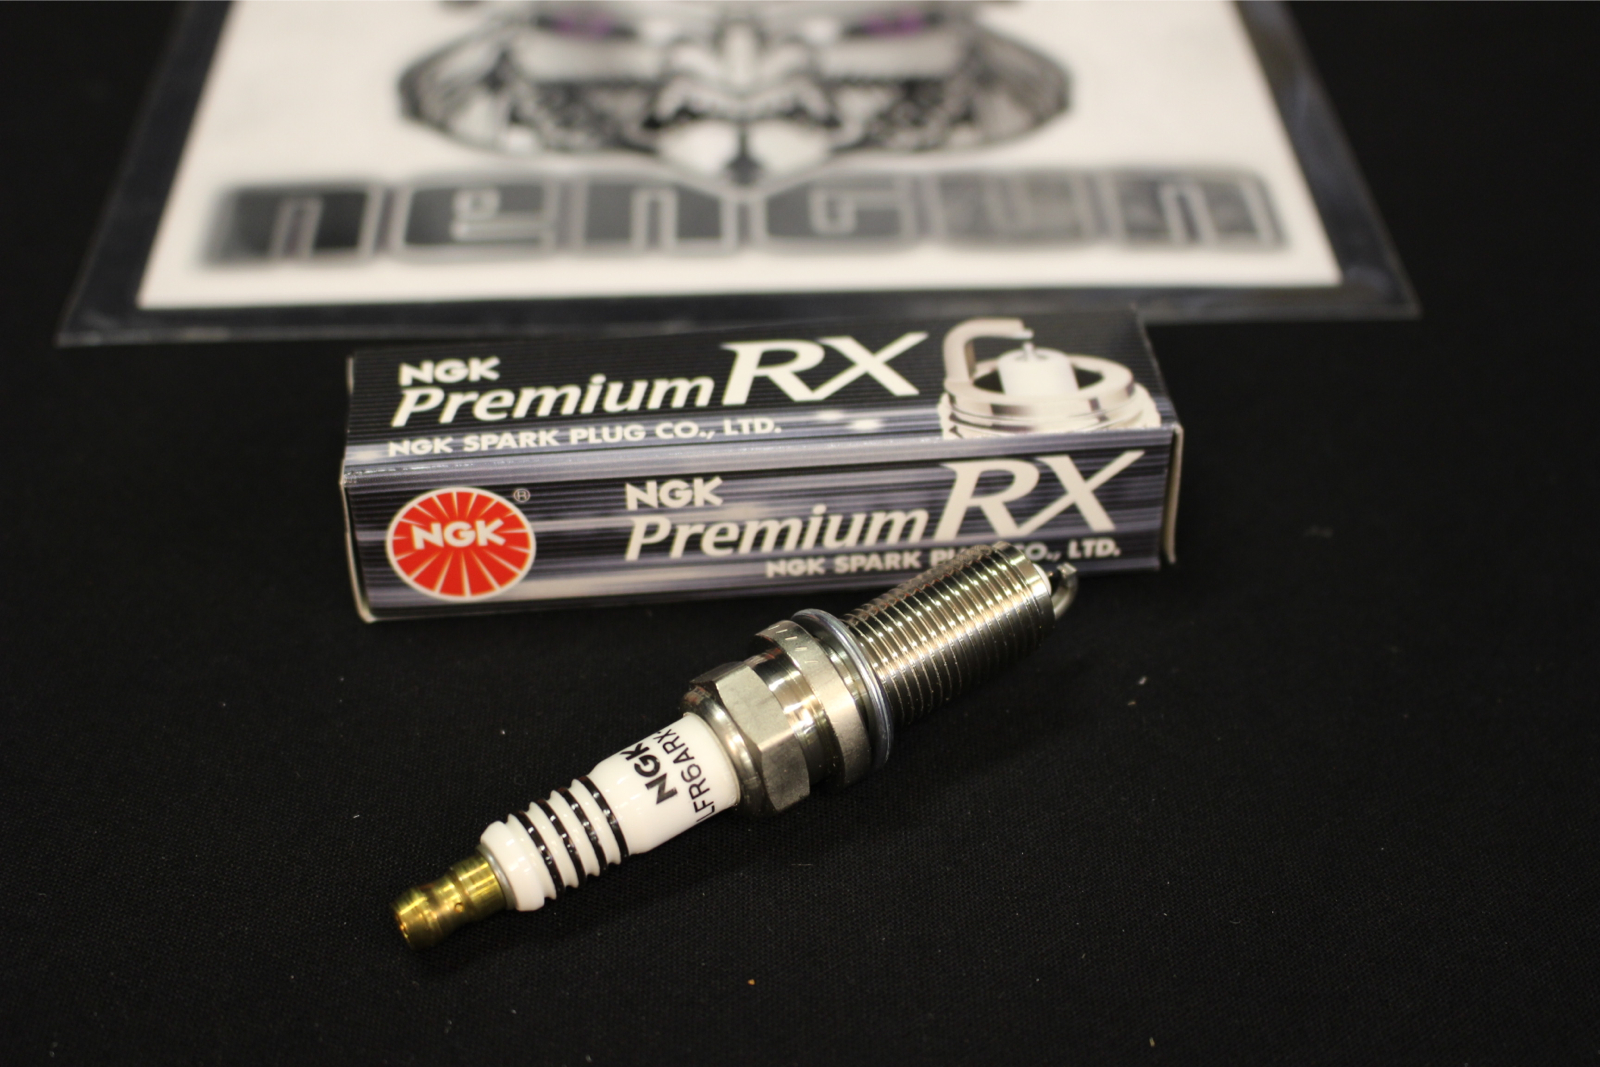 NGK - Premium RX Spark Plugs - Nengun Performance